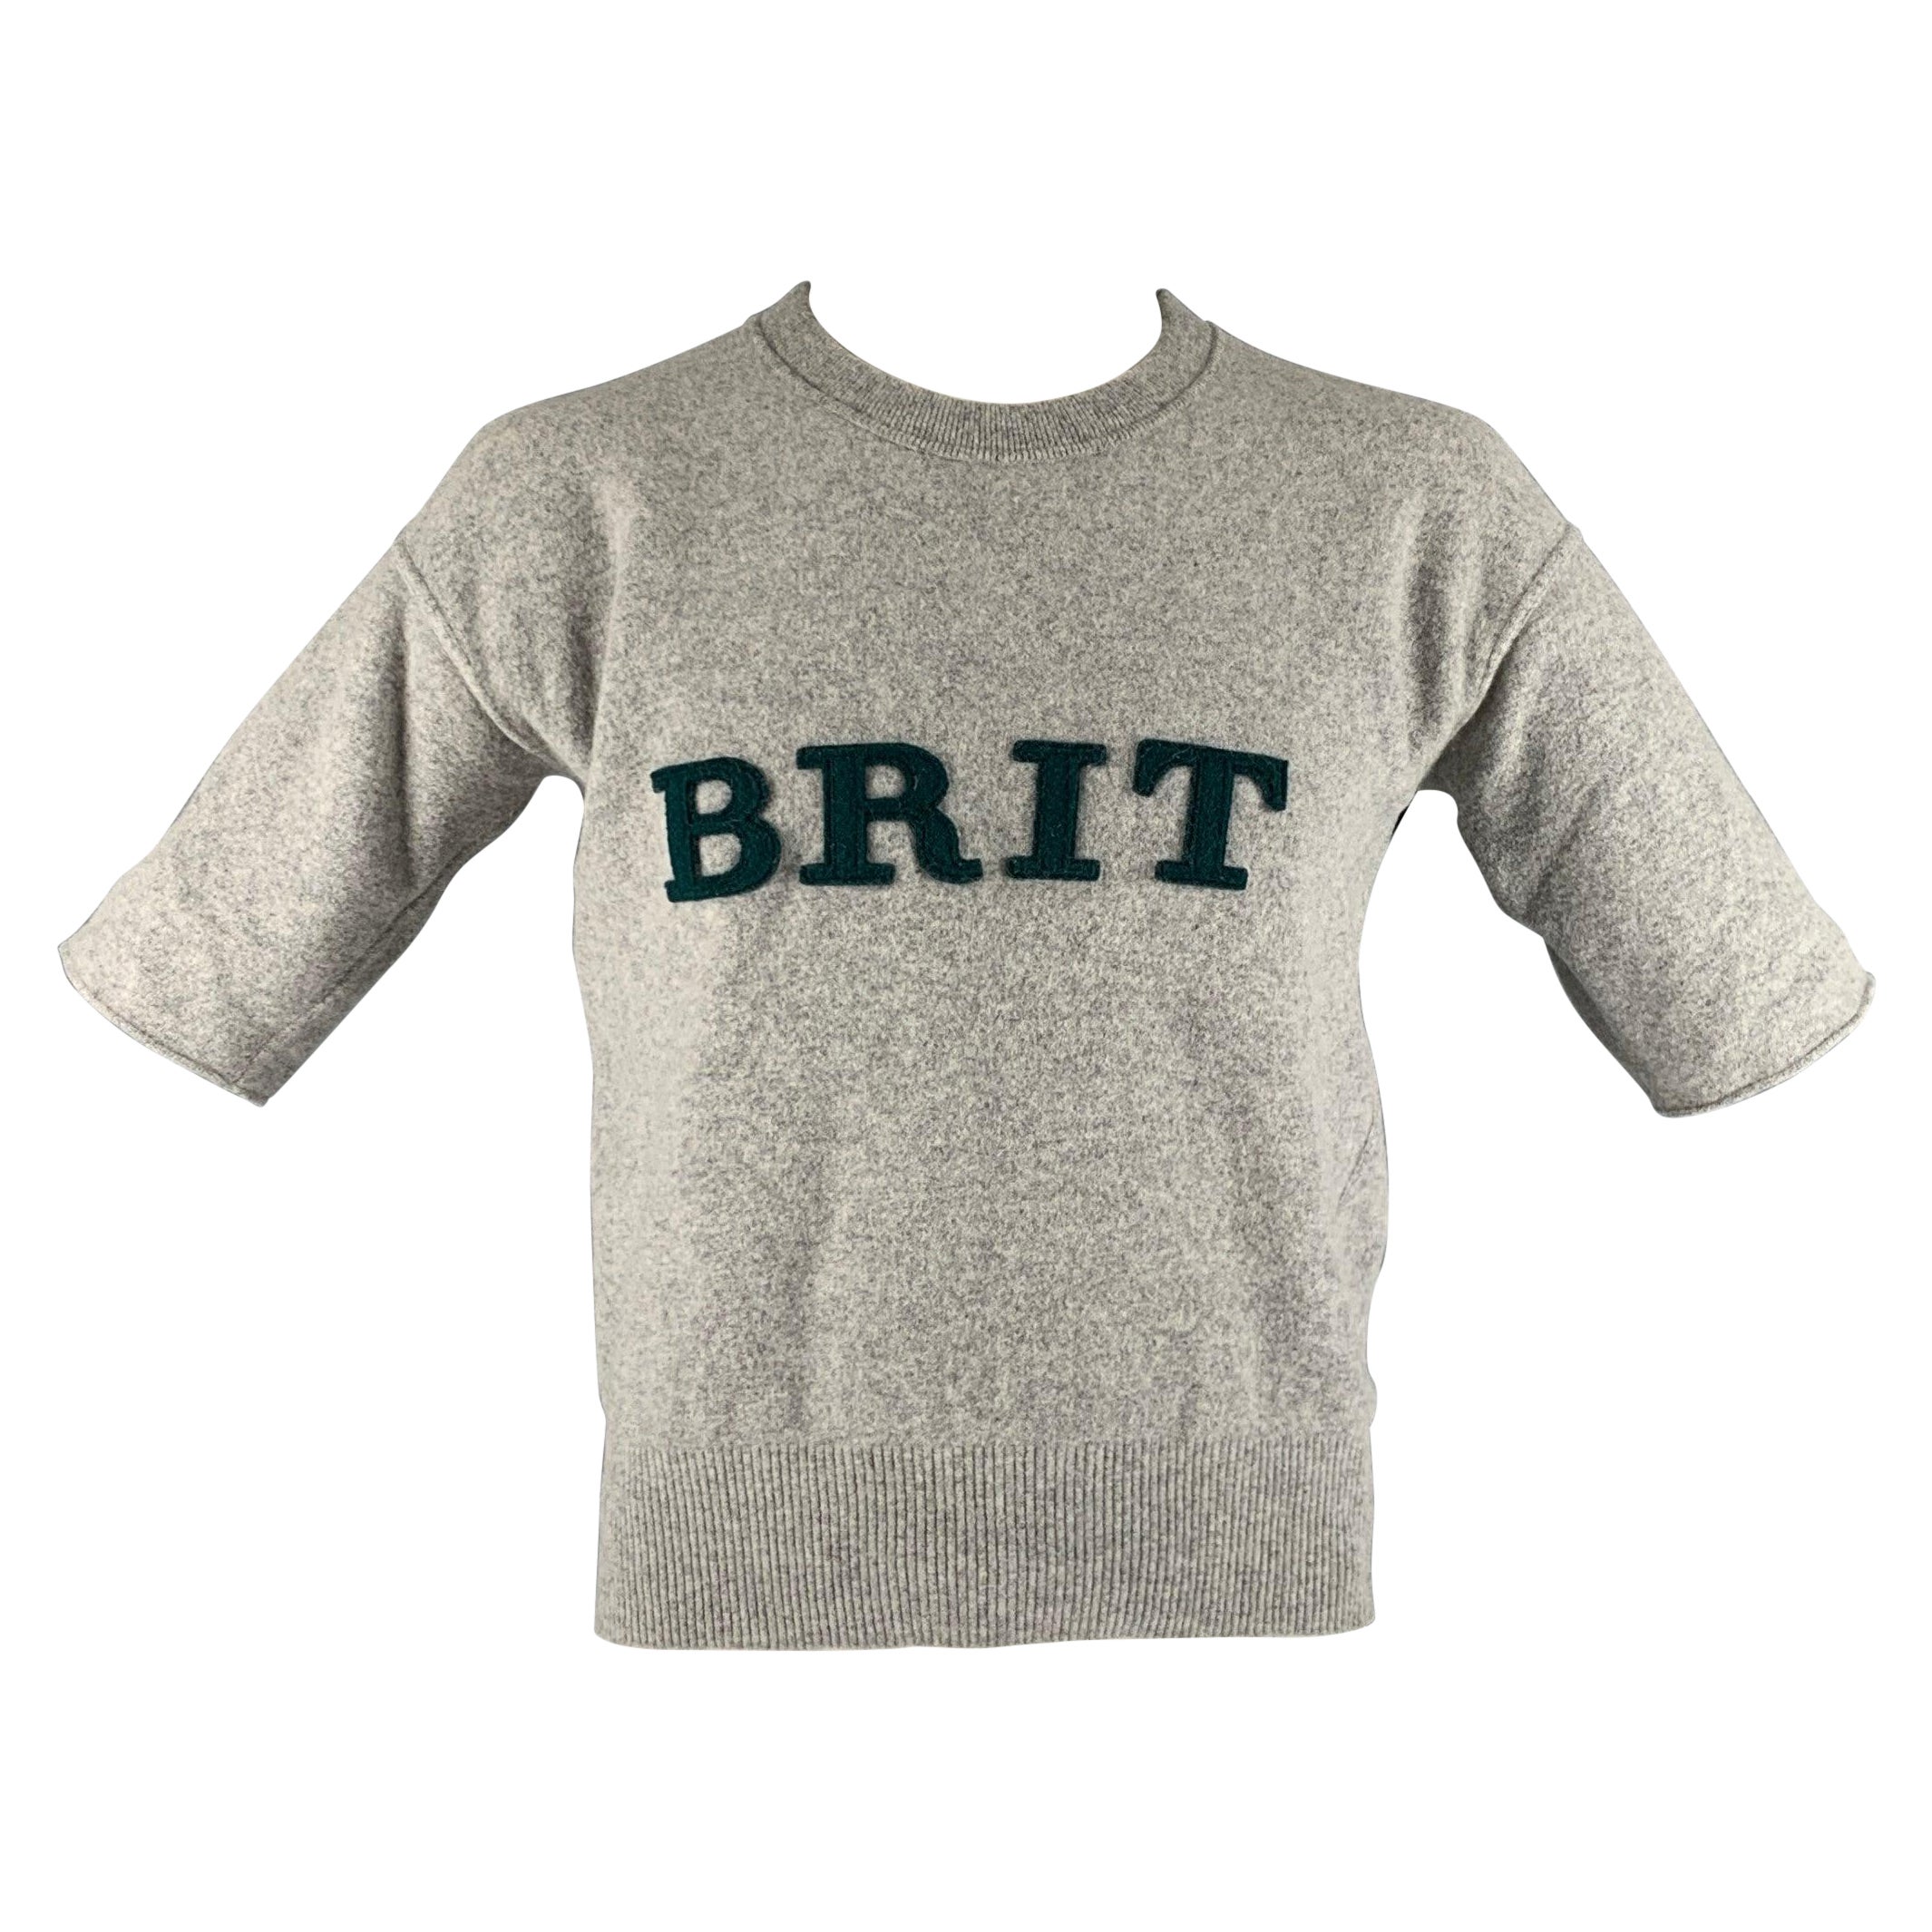 BURBERRY PRORSUM Size L Grey Green Applique T-shirt